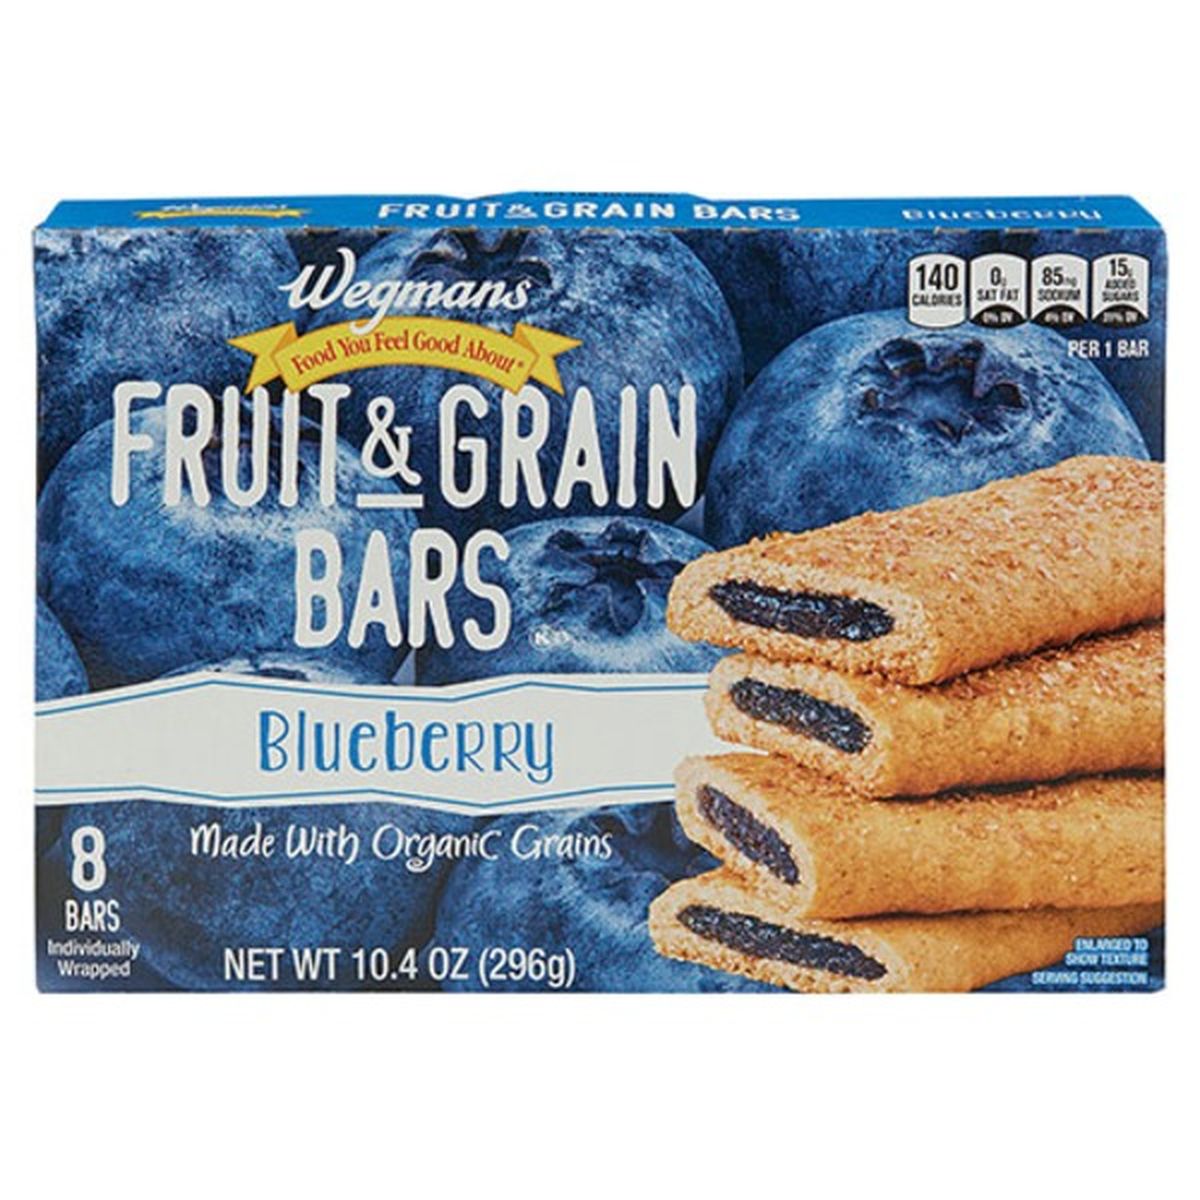 Calories in Wegmans Fruit & Grain Bars, Blueberry